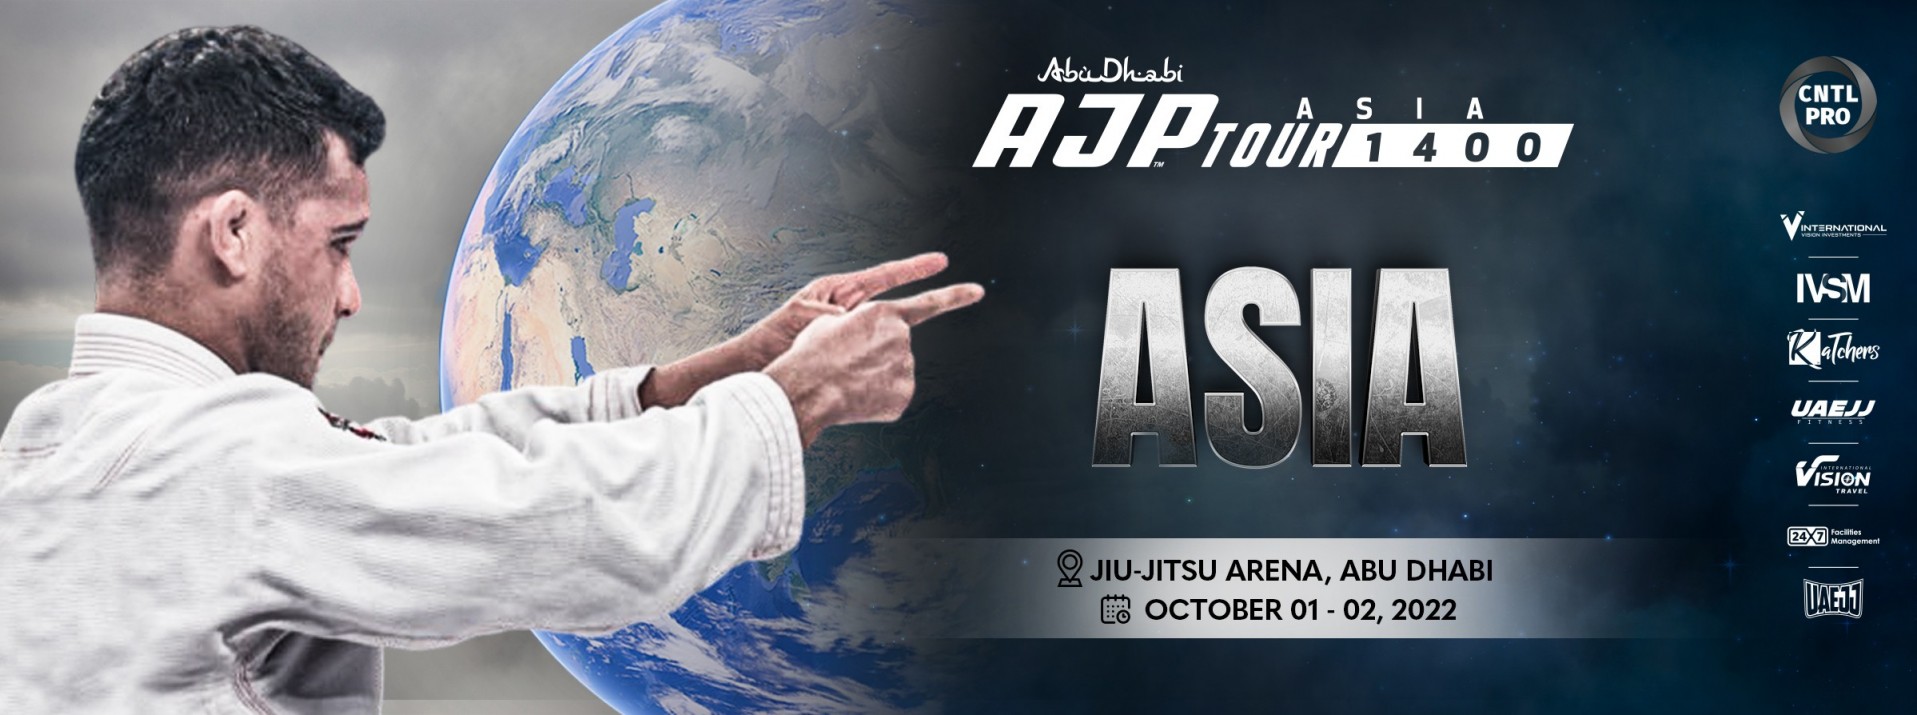 AJP Tour Asia Continental 2023: Everything to Know About the Jiu-Jitsu  Championship - Wego Travel Blog